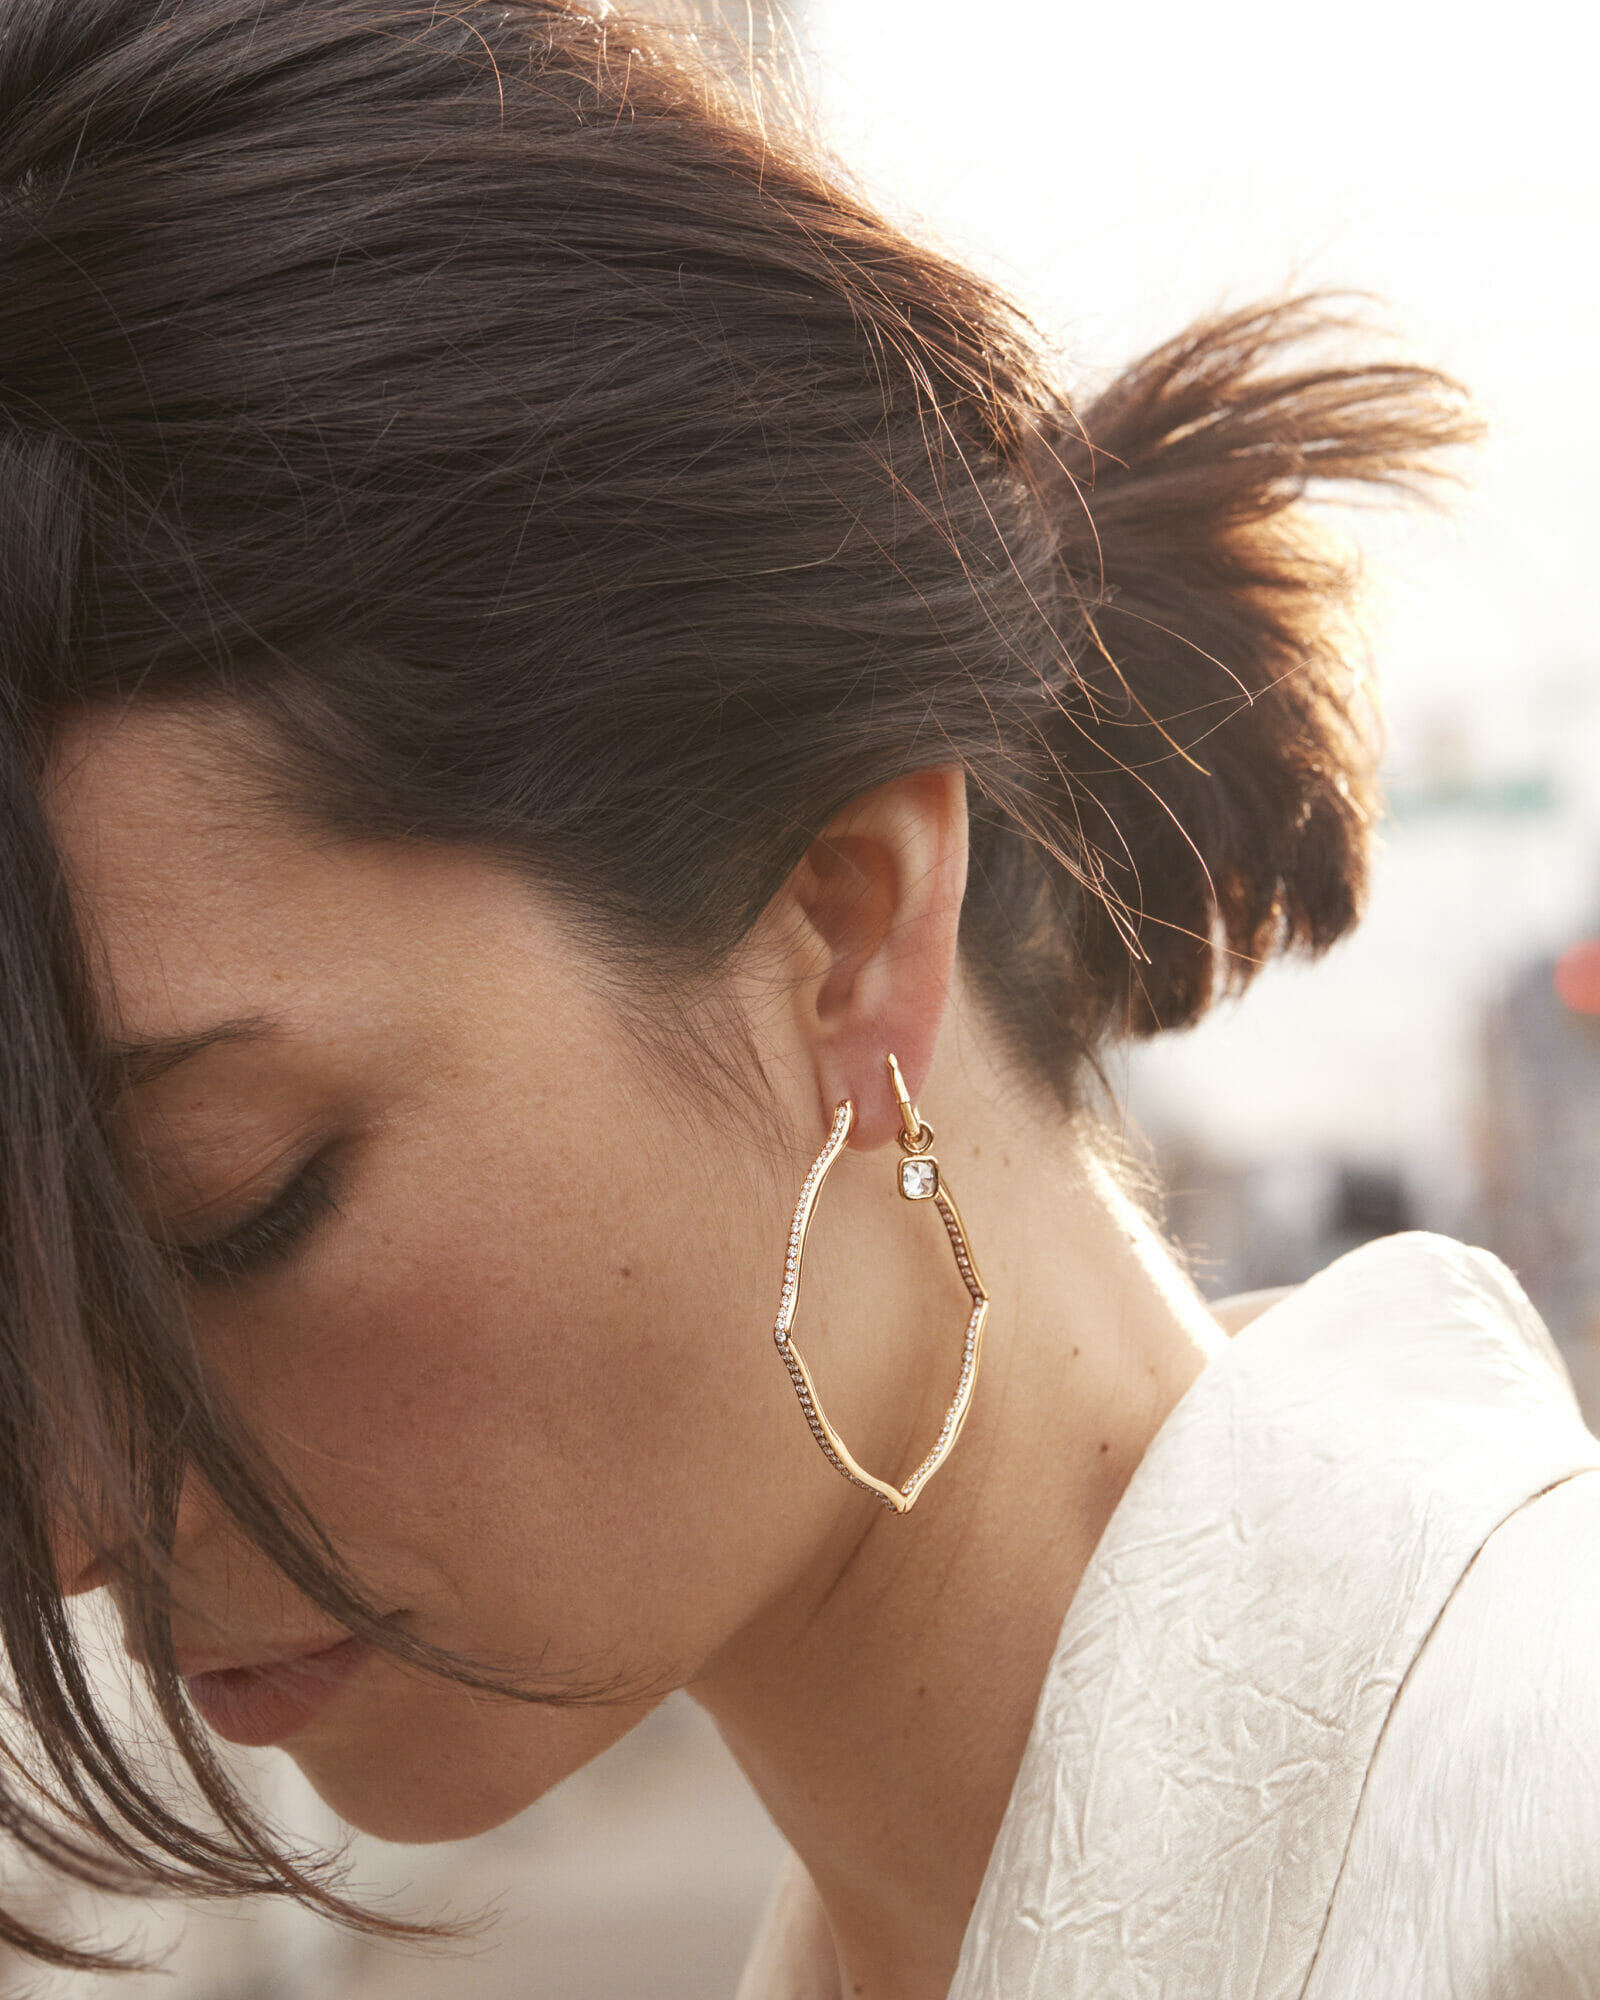 New hoops, woman wearing hoop earrings with single diamond